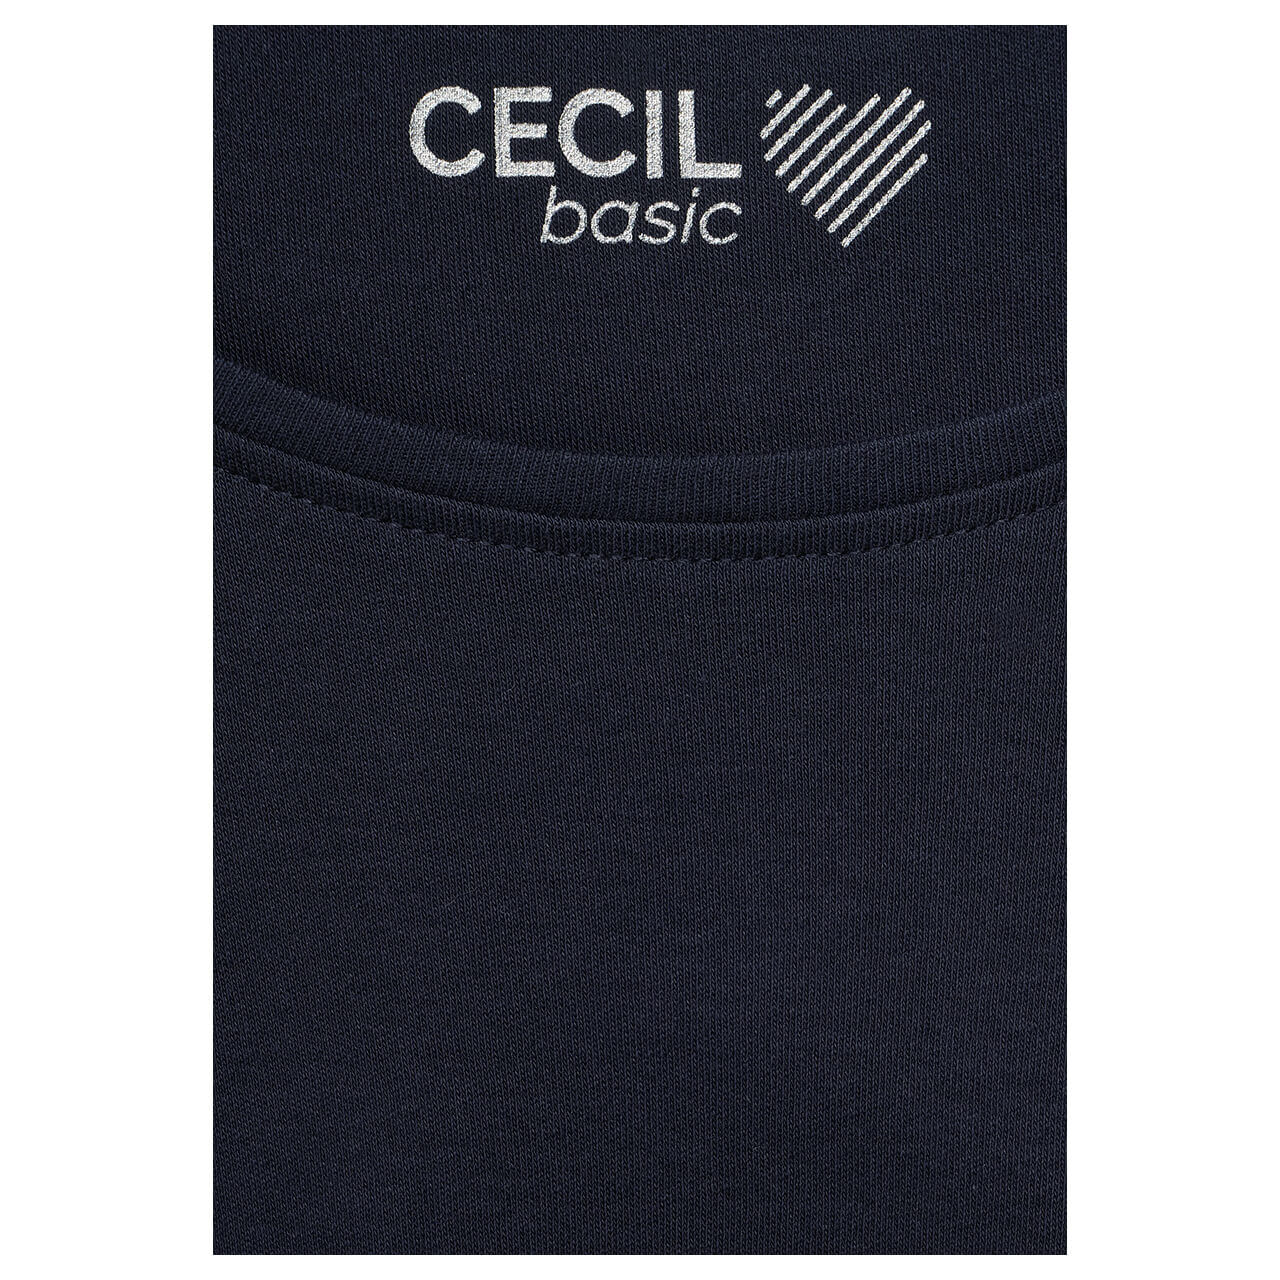 Cecil Pia Damen Shirt 14077 in kaufen Blau 